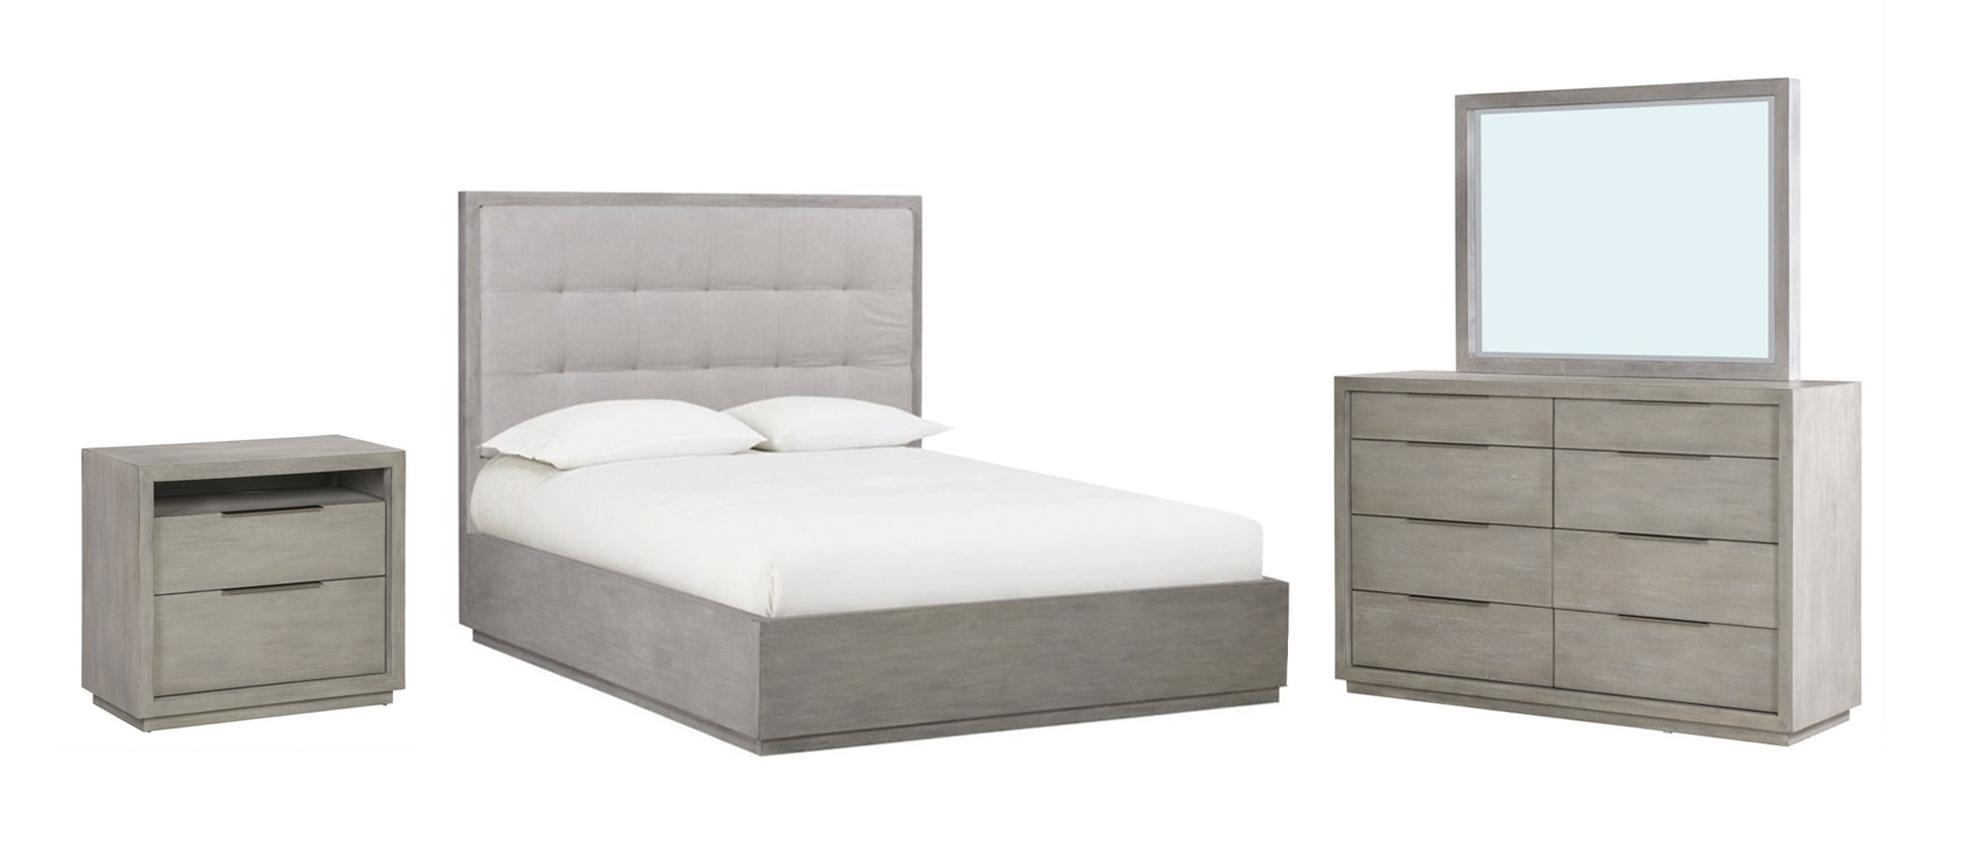 Contemporary Storage Bedroom Set OXFORD STORAGE AZBXS5-NDM-4PC in Light Gray, Stone Fabric